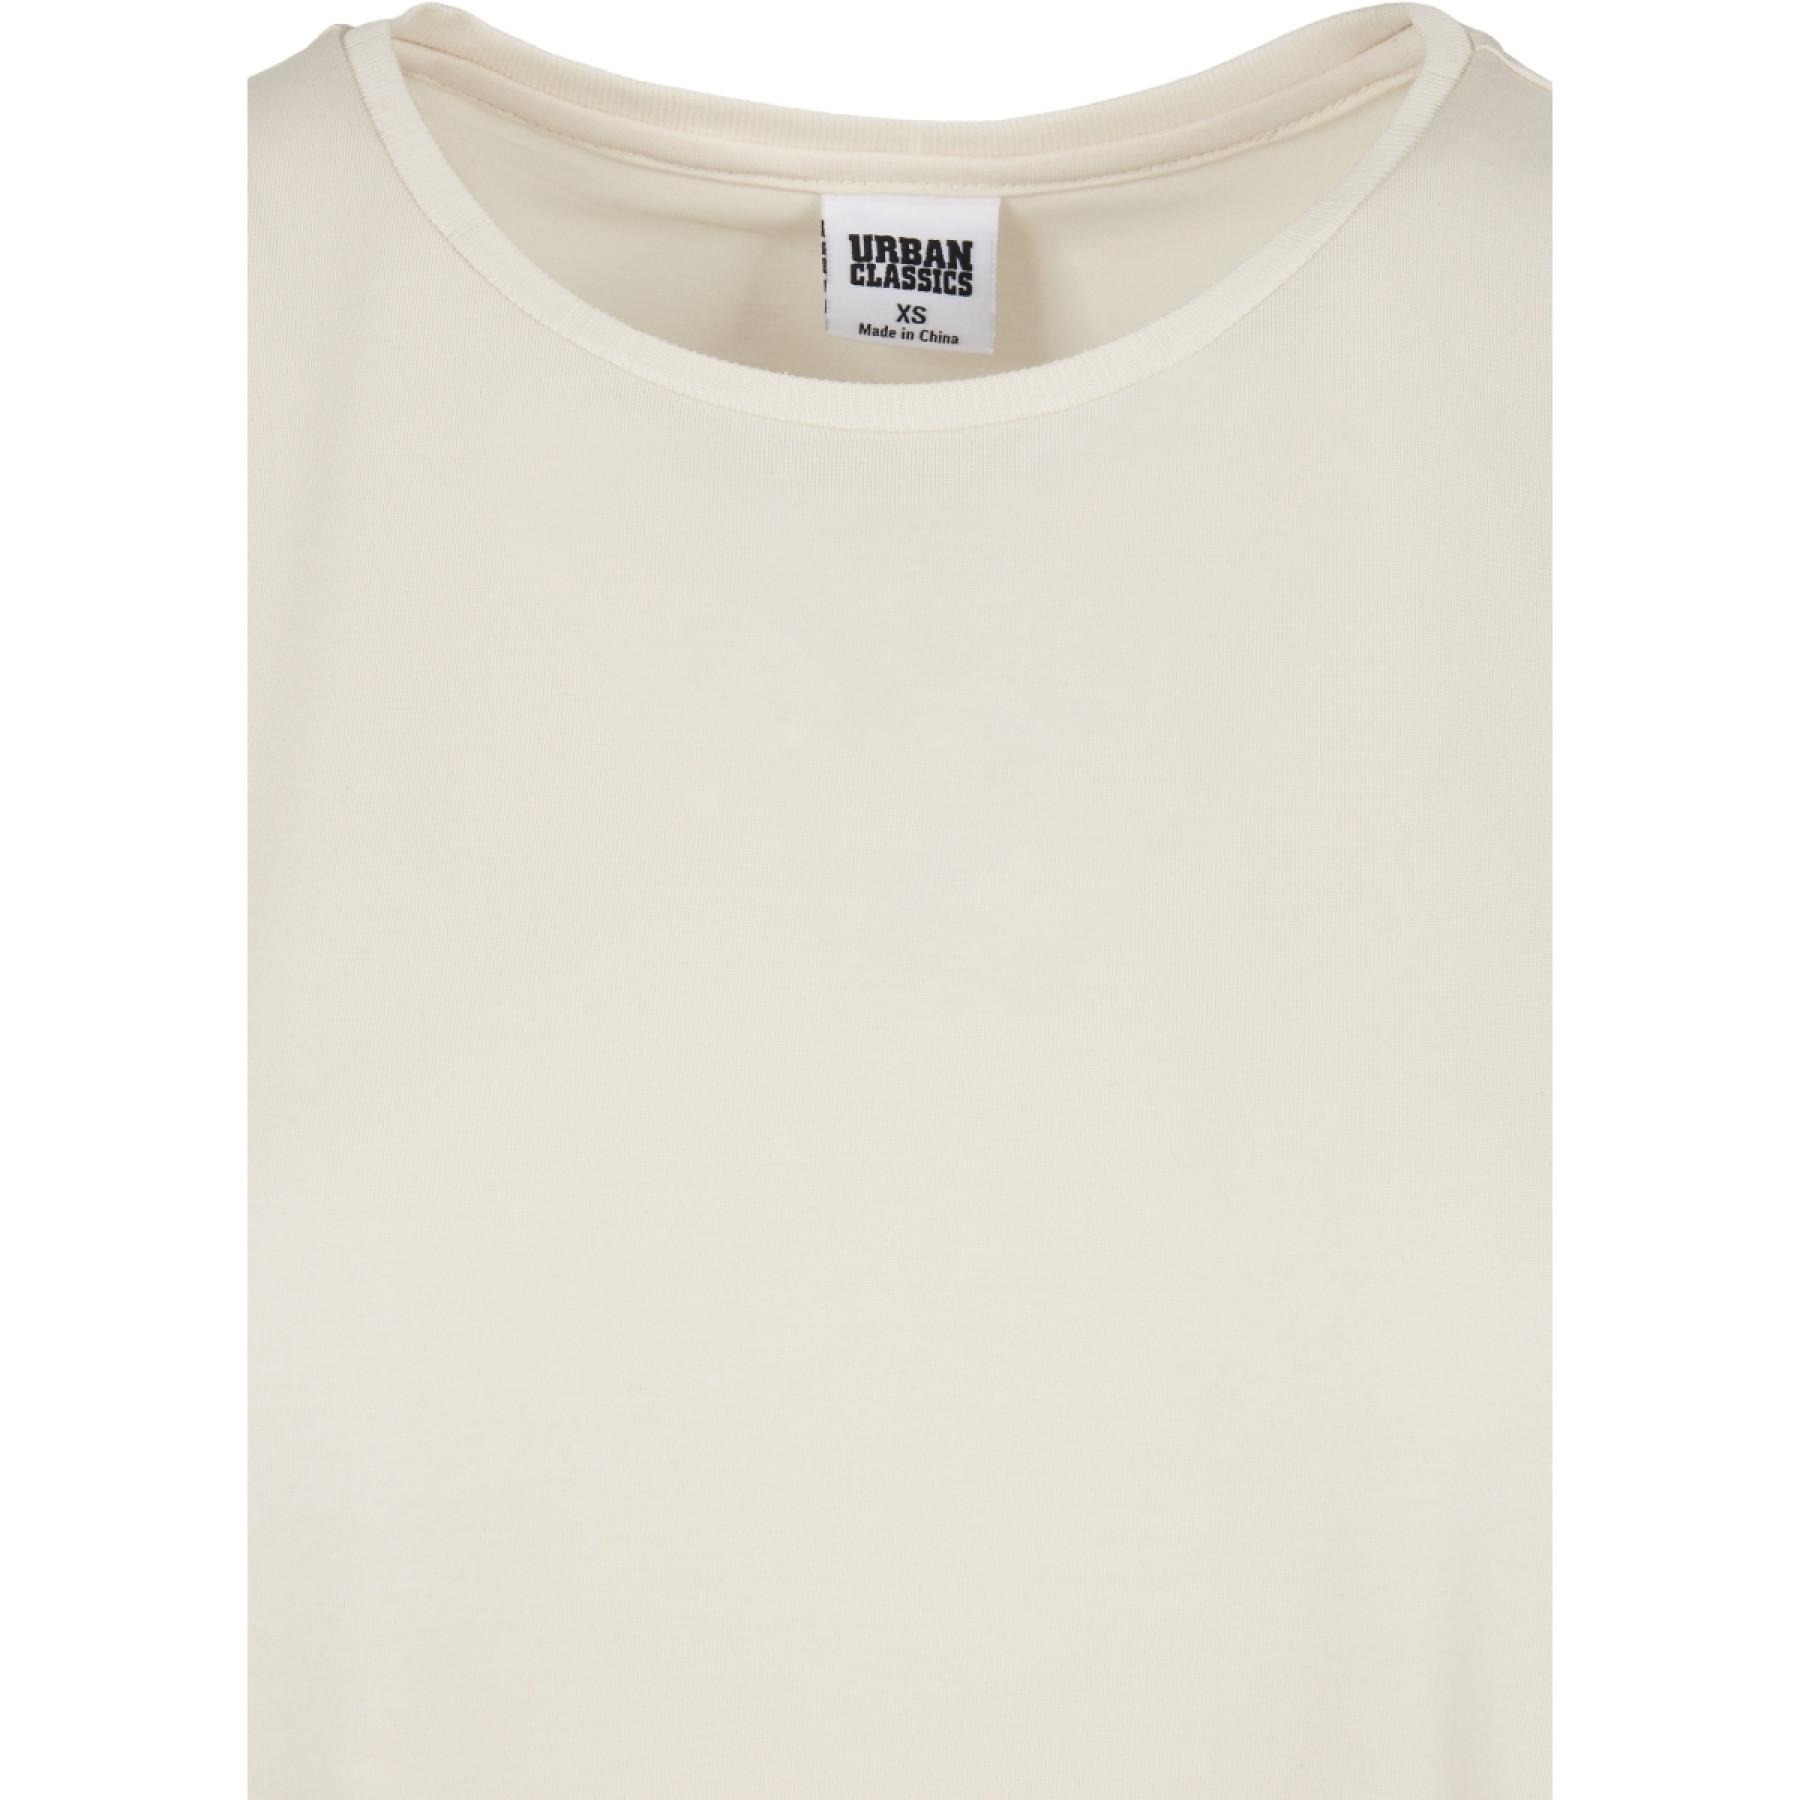 Women's T-shirt Urban Classics modal extended shoulder- large sizes